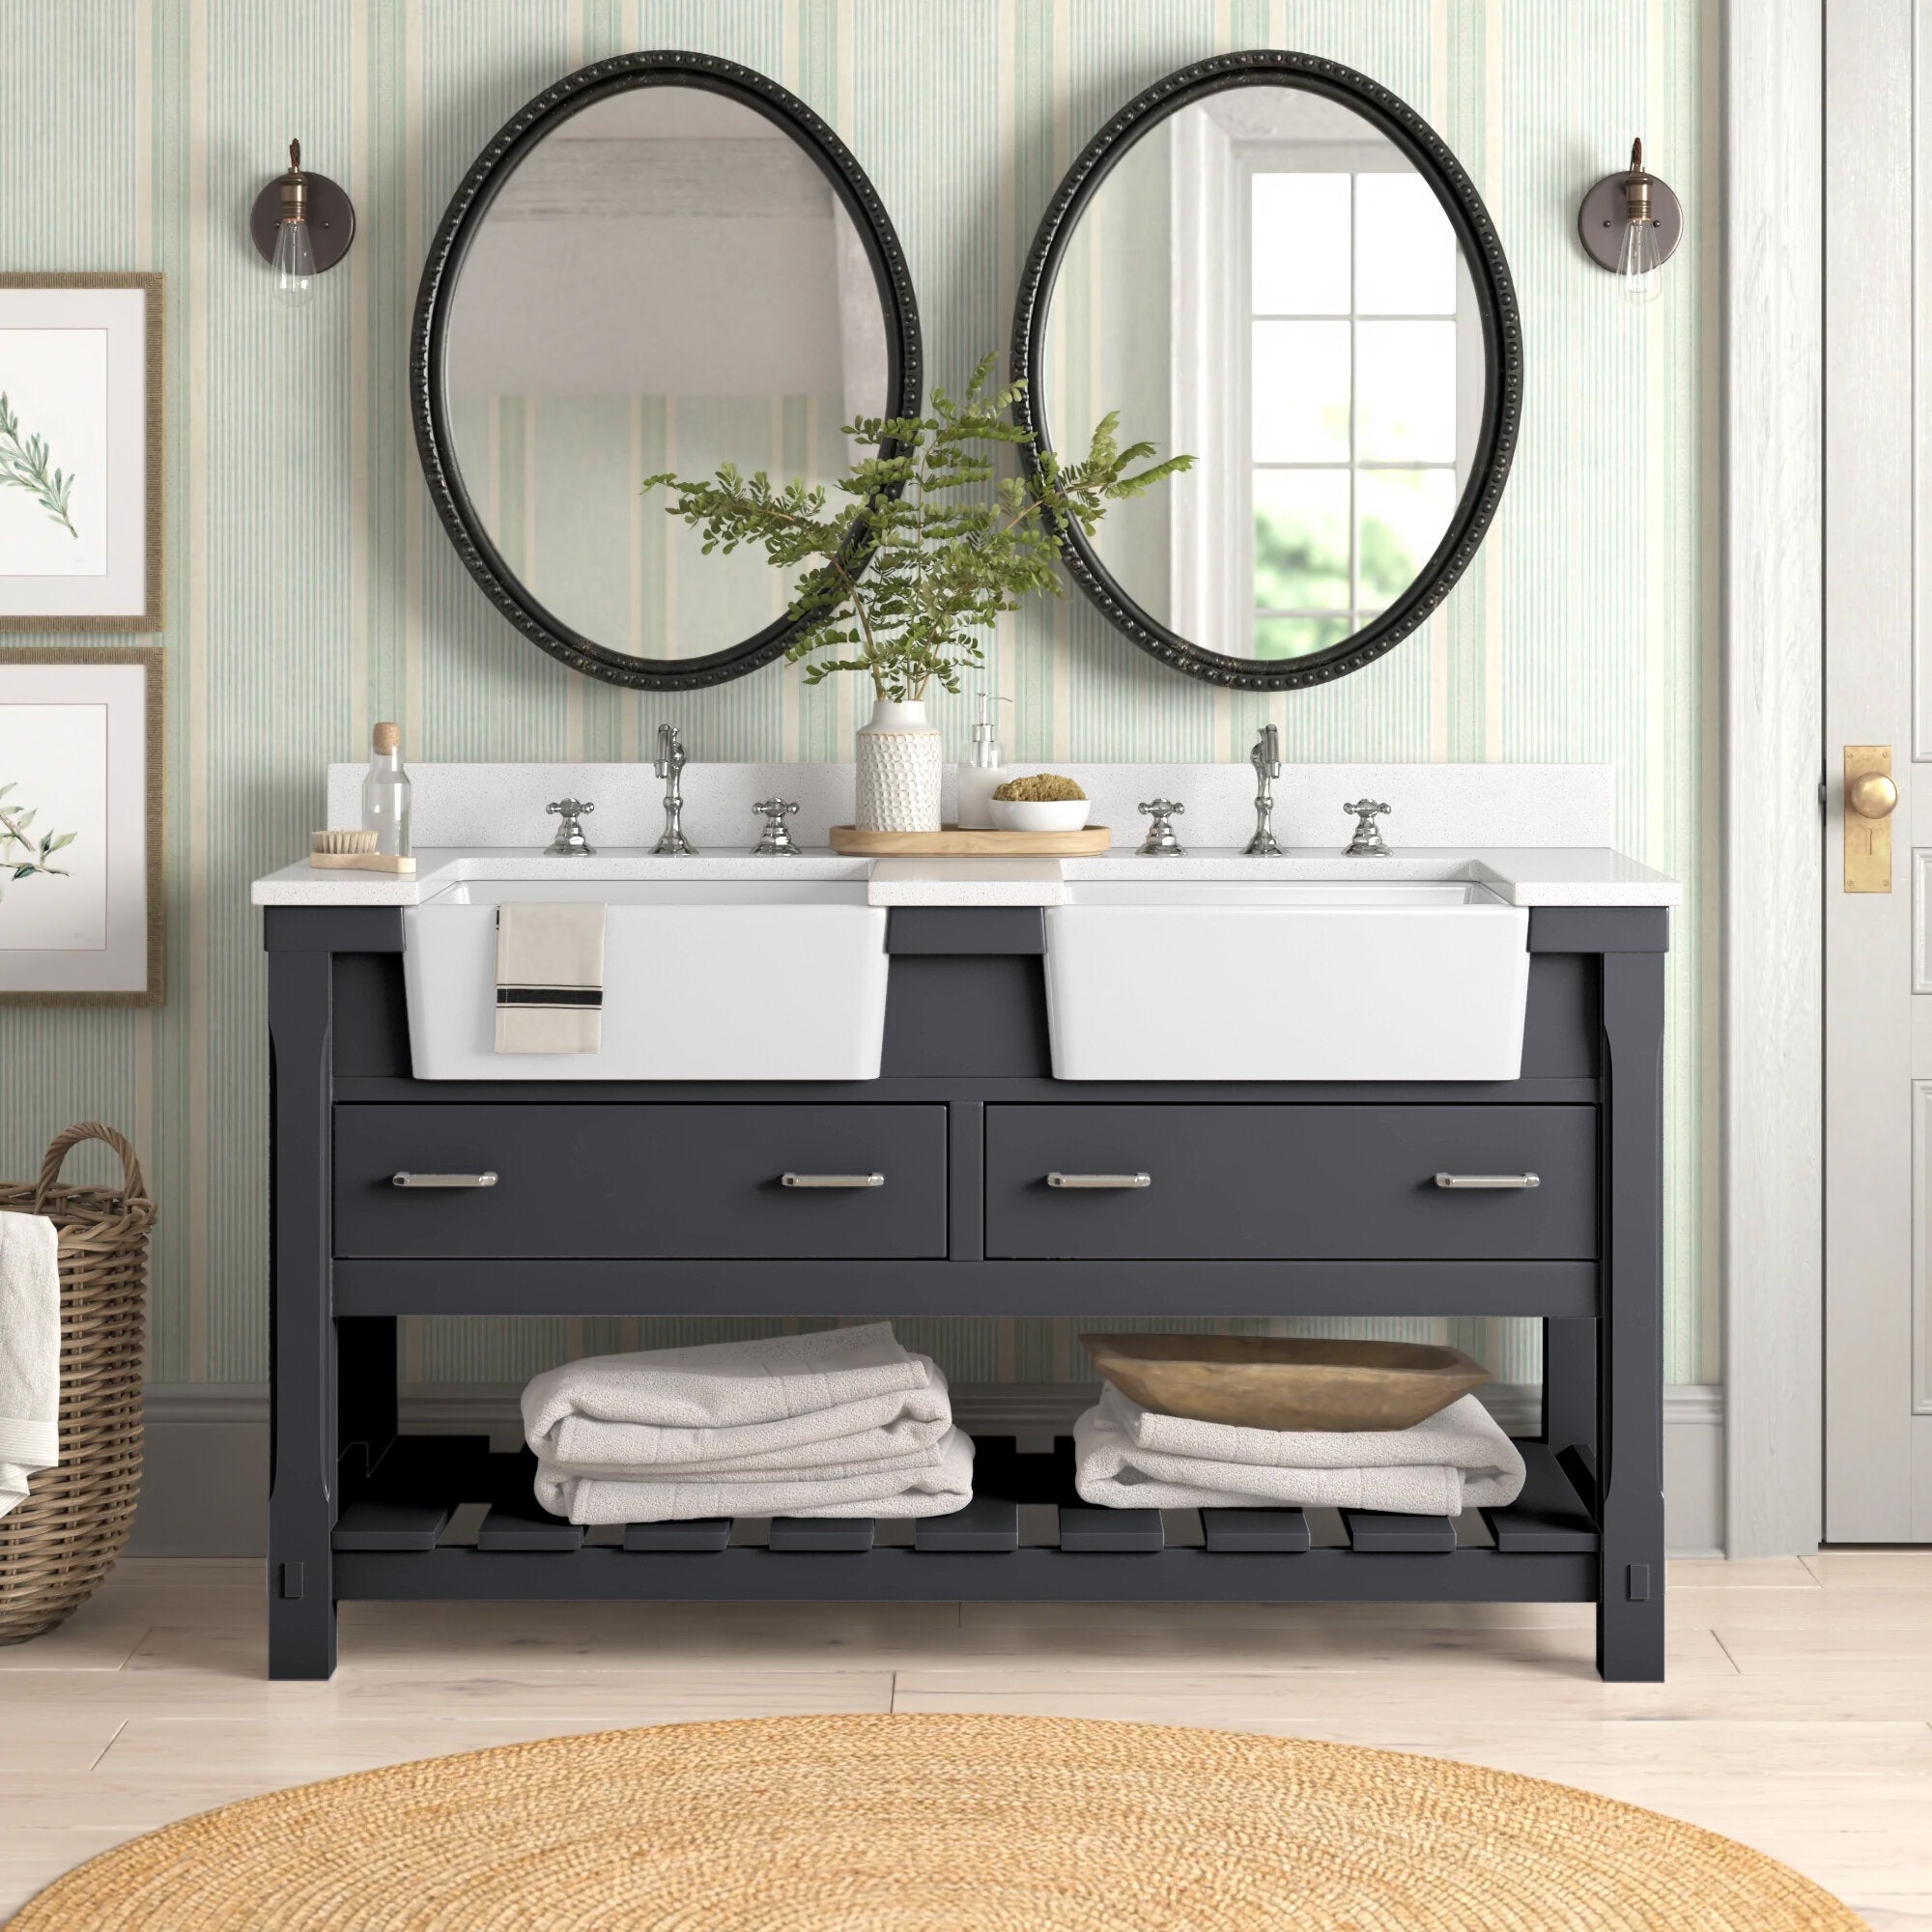 Charlotte 60 Farmhouse Double Bathroom Vanity Apron Sink Quartz Top Kitchenbathcollection